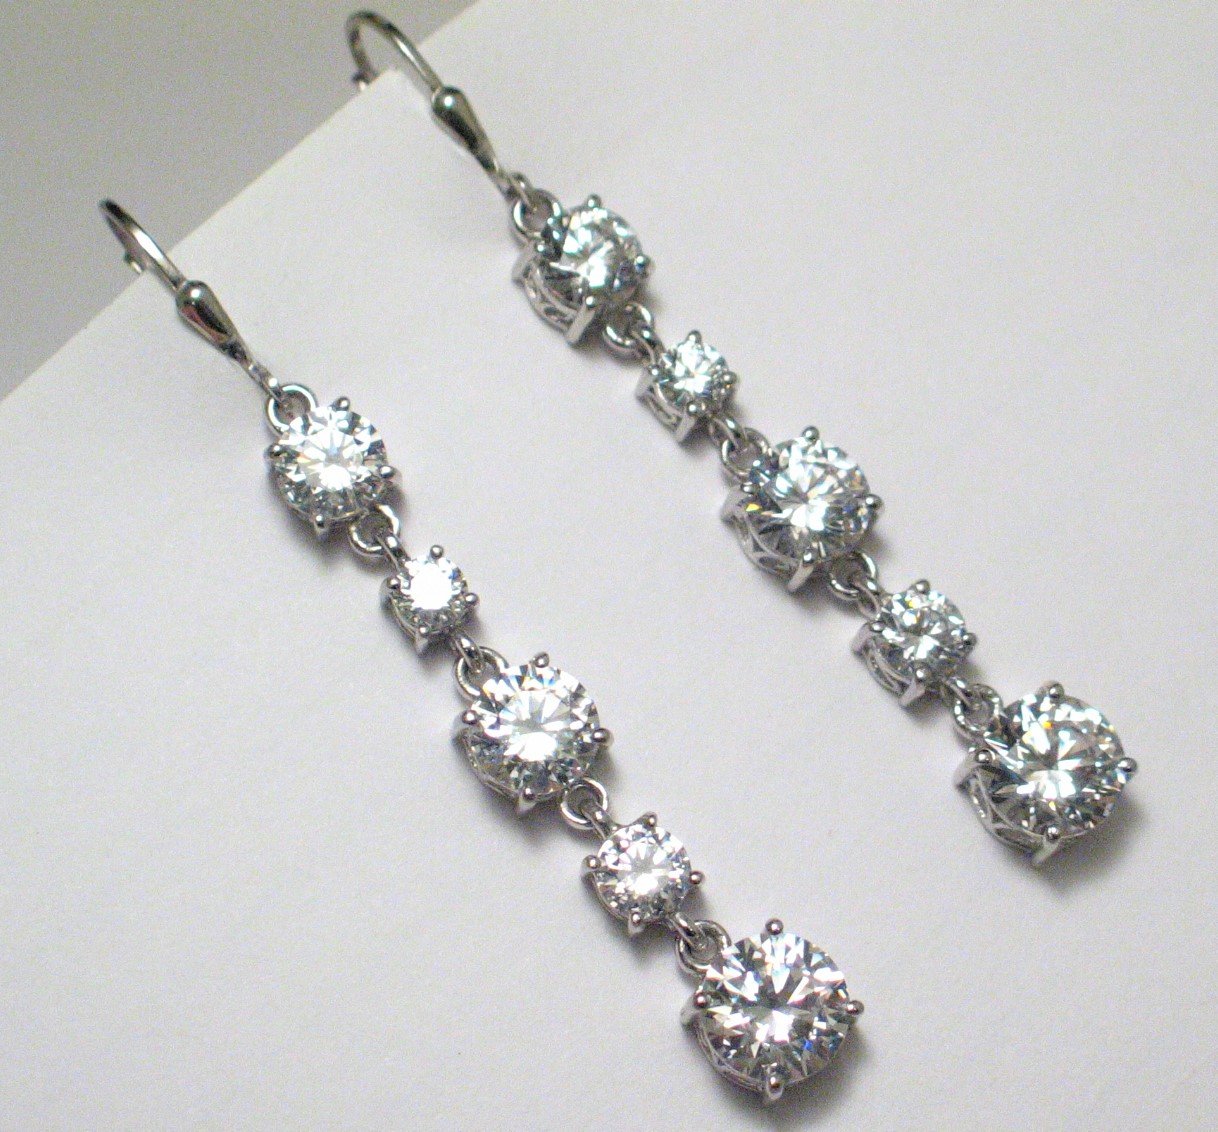 Dangle Earrings, Womens Ultimate Sparkly Cz Stone Sterling Silver Long Drop Earrings - Discount Pre-owned Jewelry - Blingschlingers